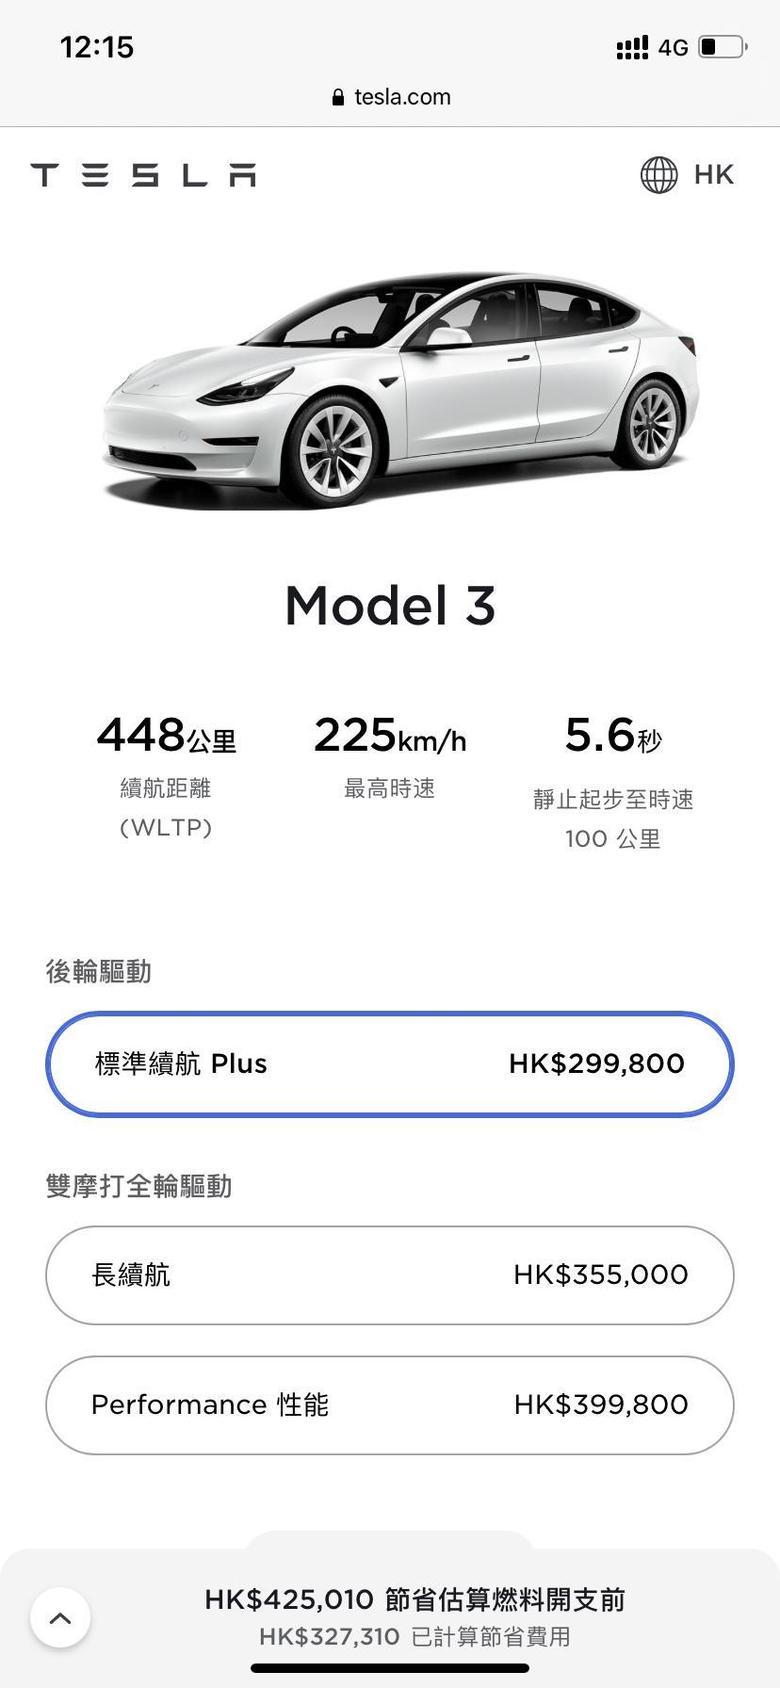 model 3 特斯拉香港官网推出一款续航580公里的model3售价355000港币